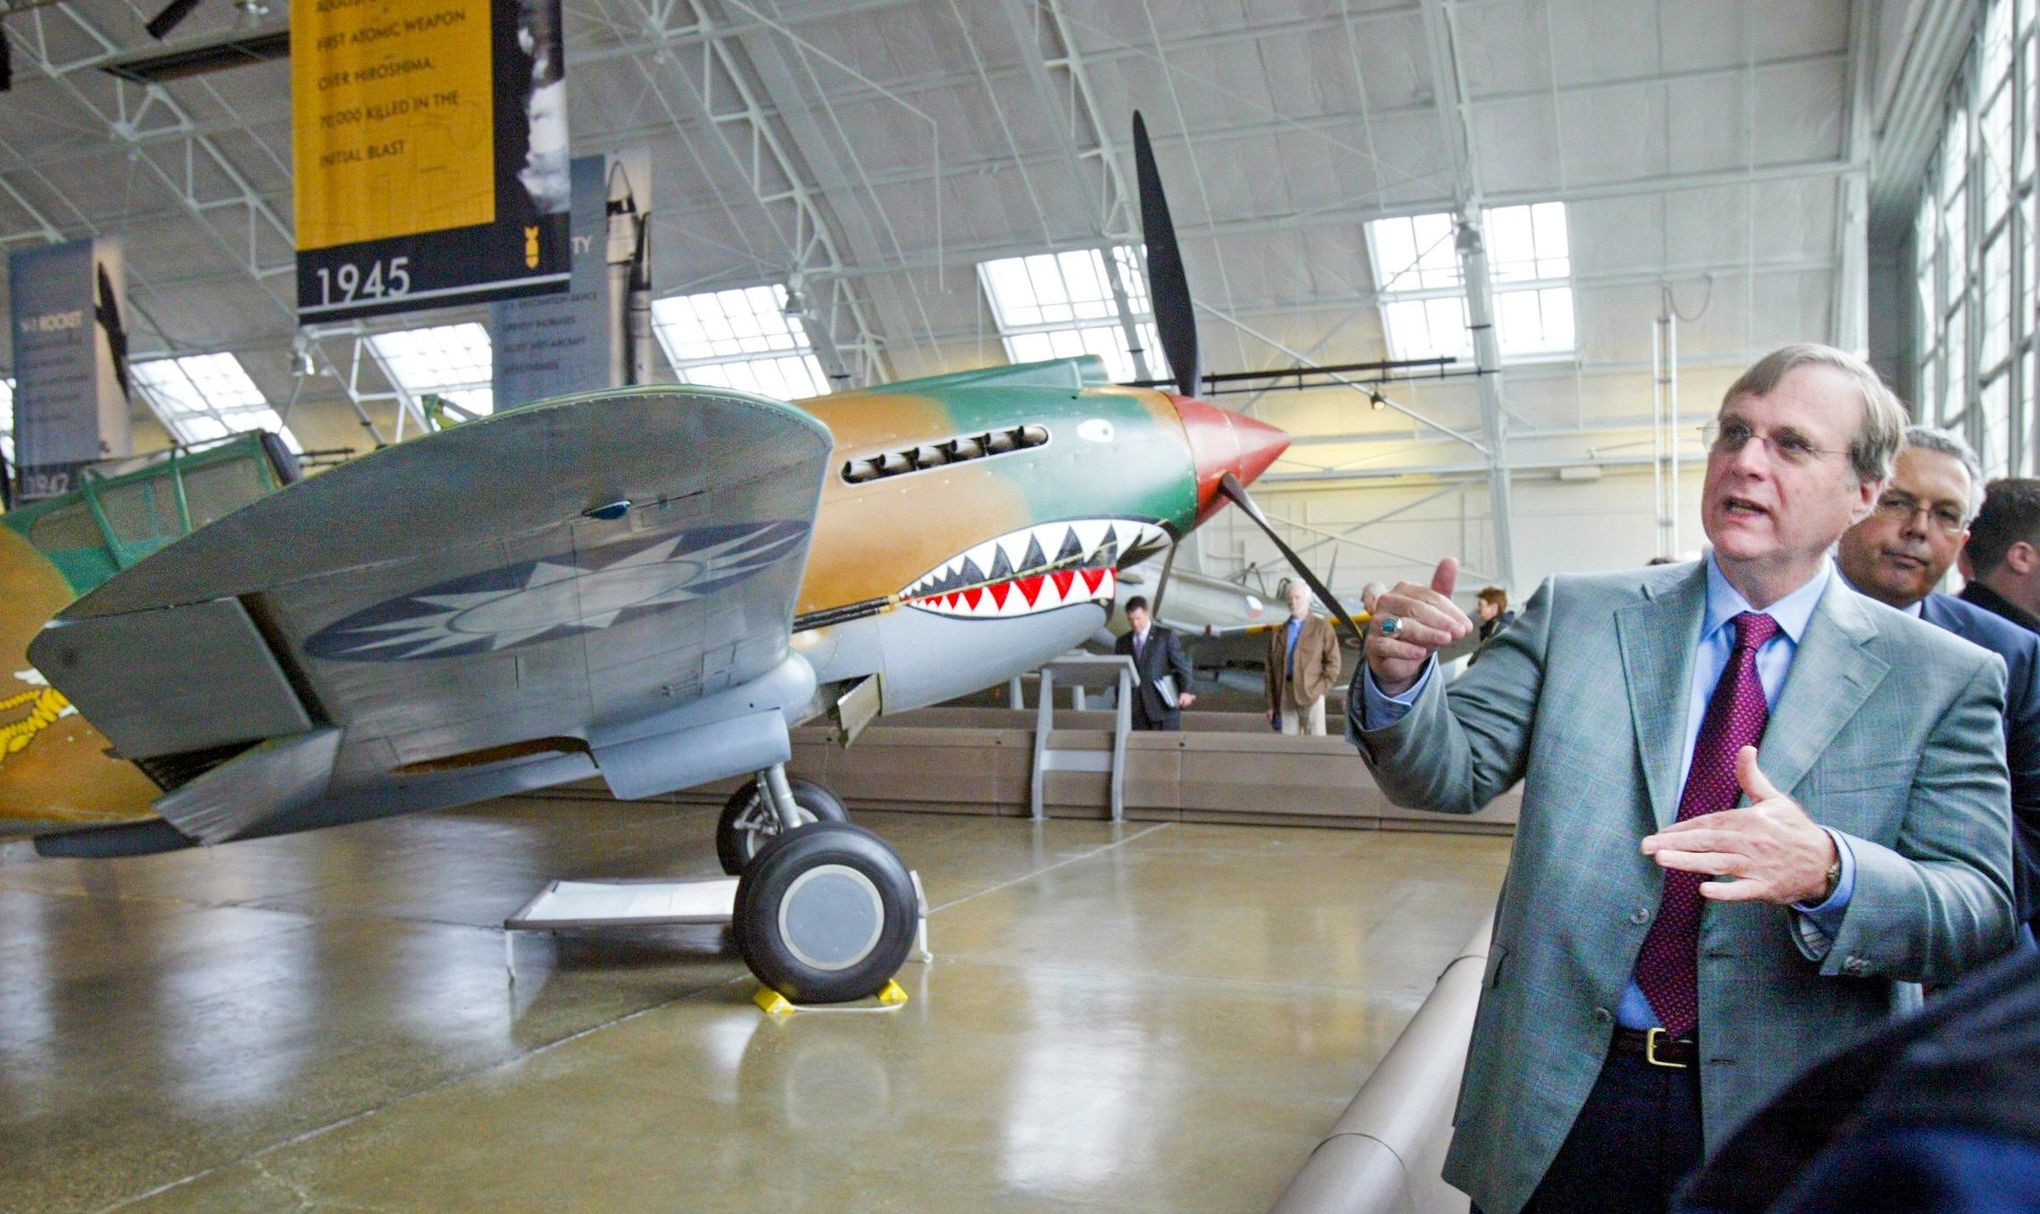 Beyblades EVERYWHERE - Museum of Aviation